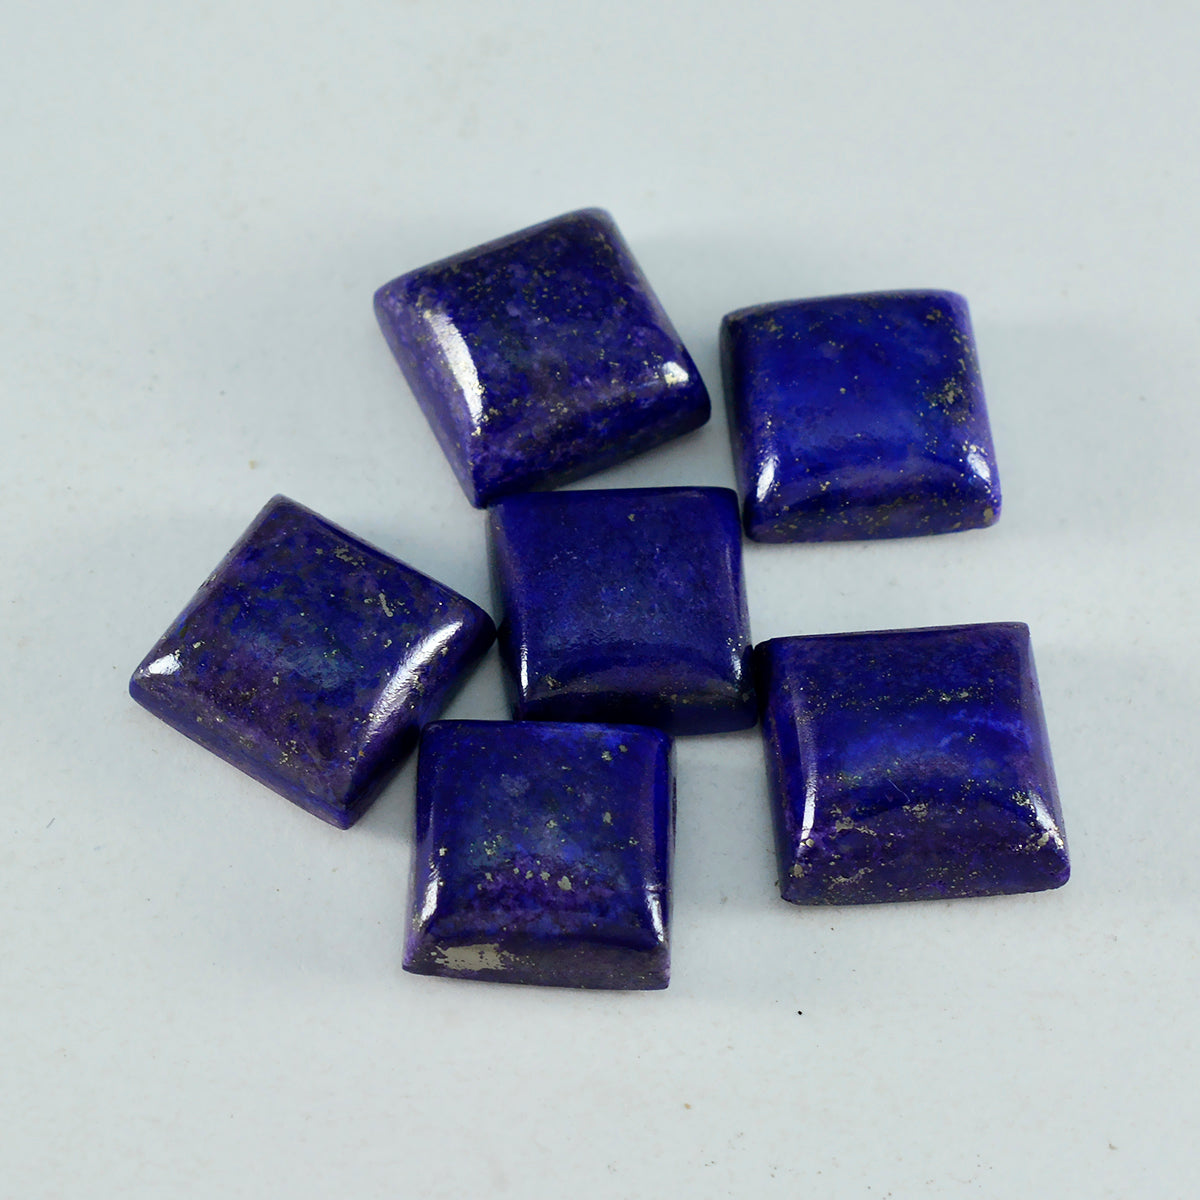 Riyogems 1PC Blue Lapis Lazuli Cabochon 13x13 mm Square Shape A+ Quality Gem